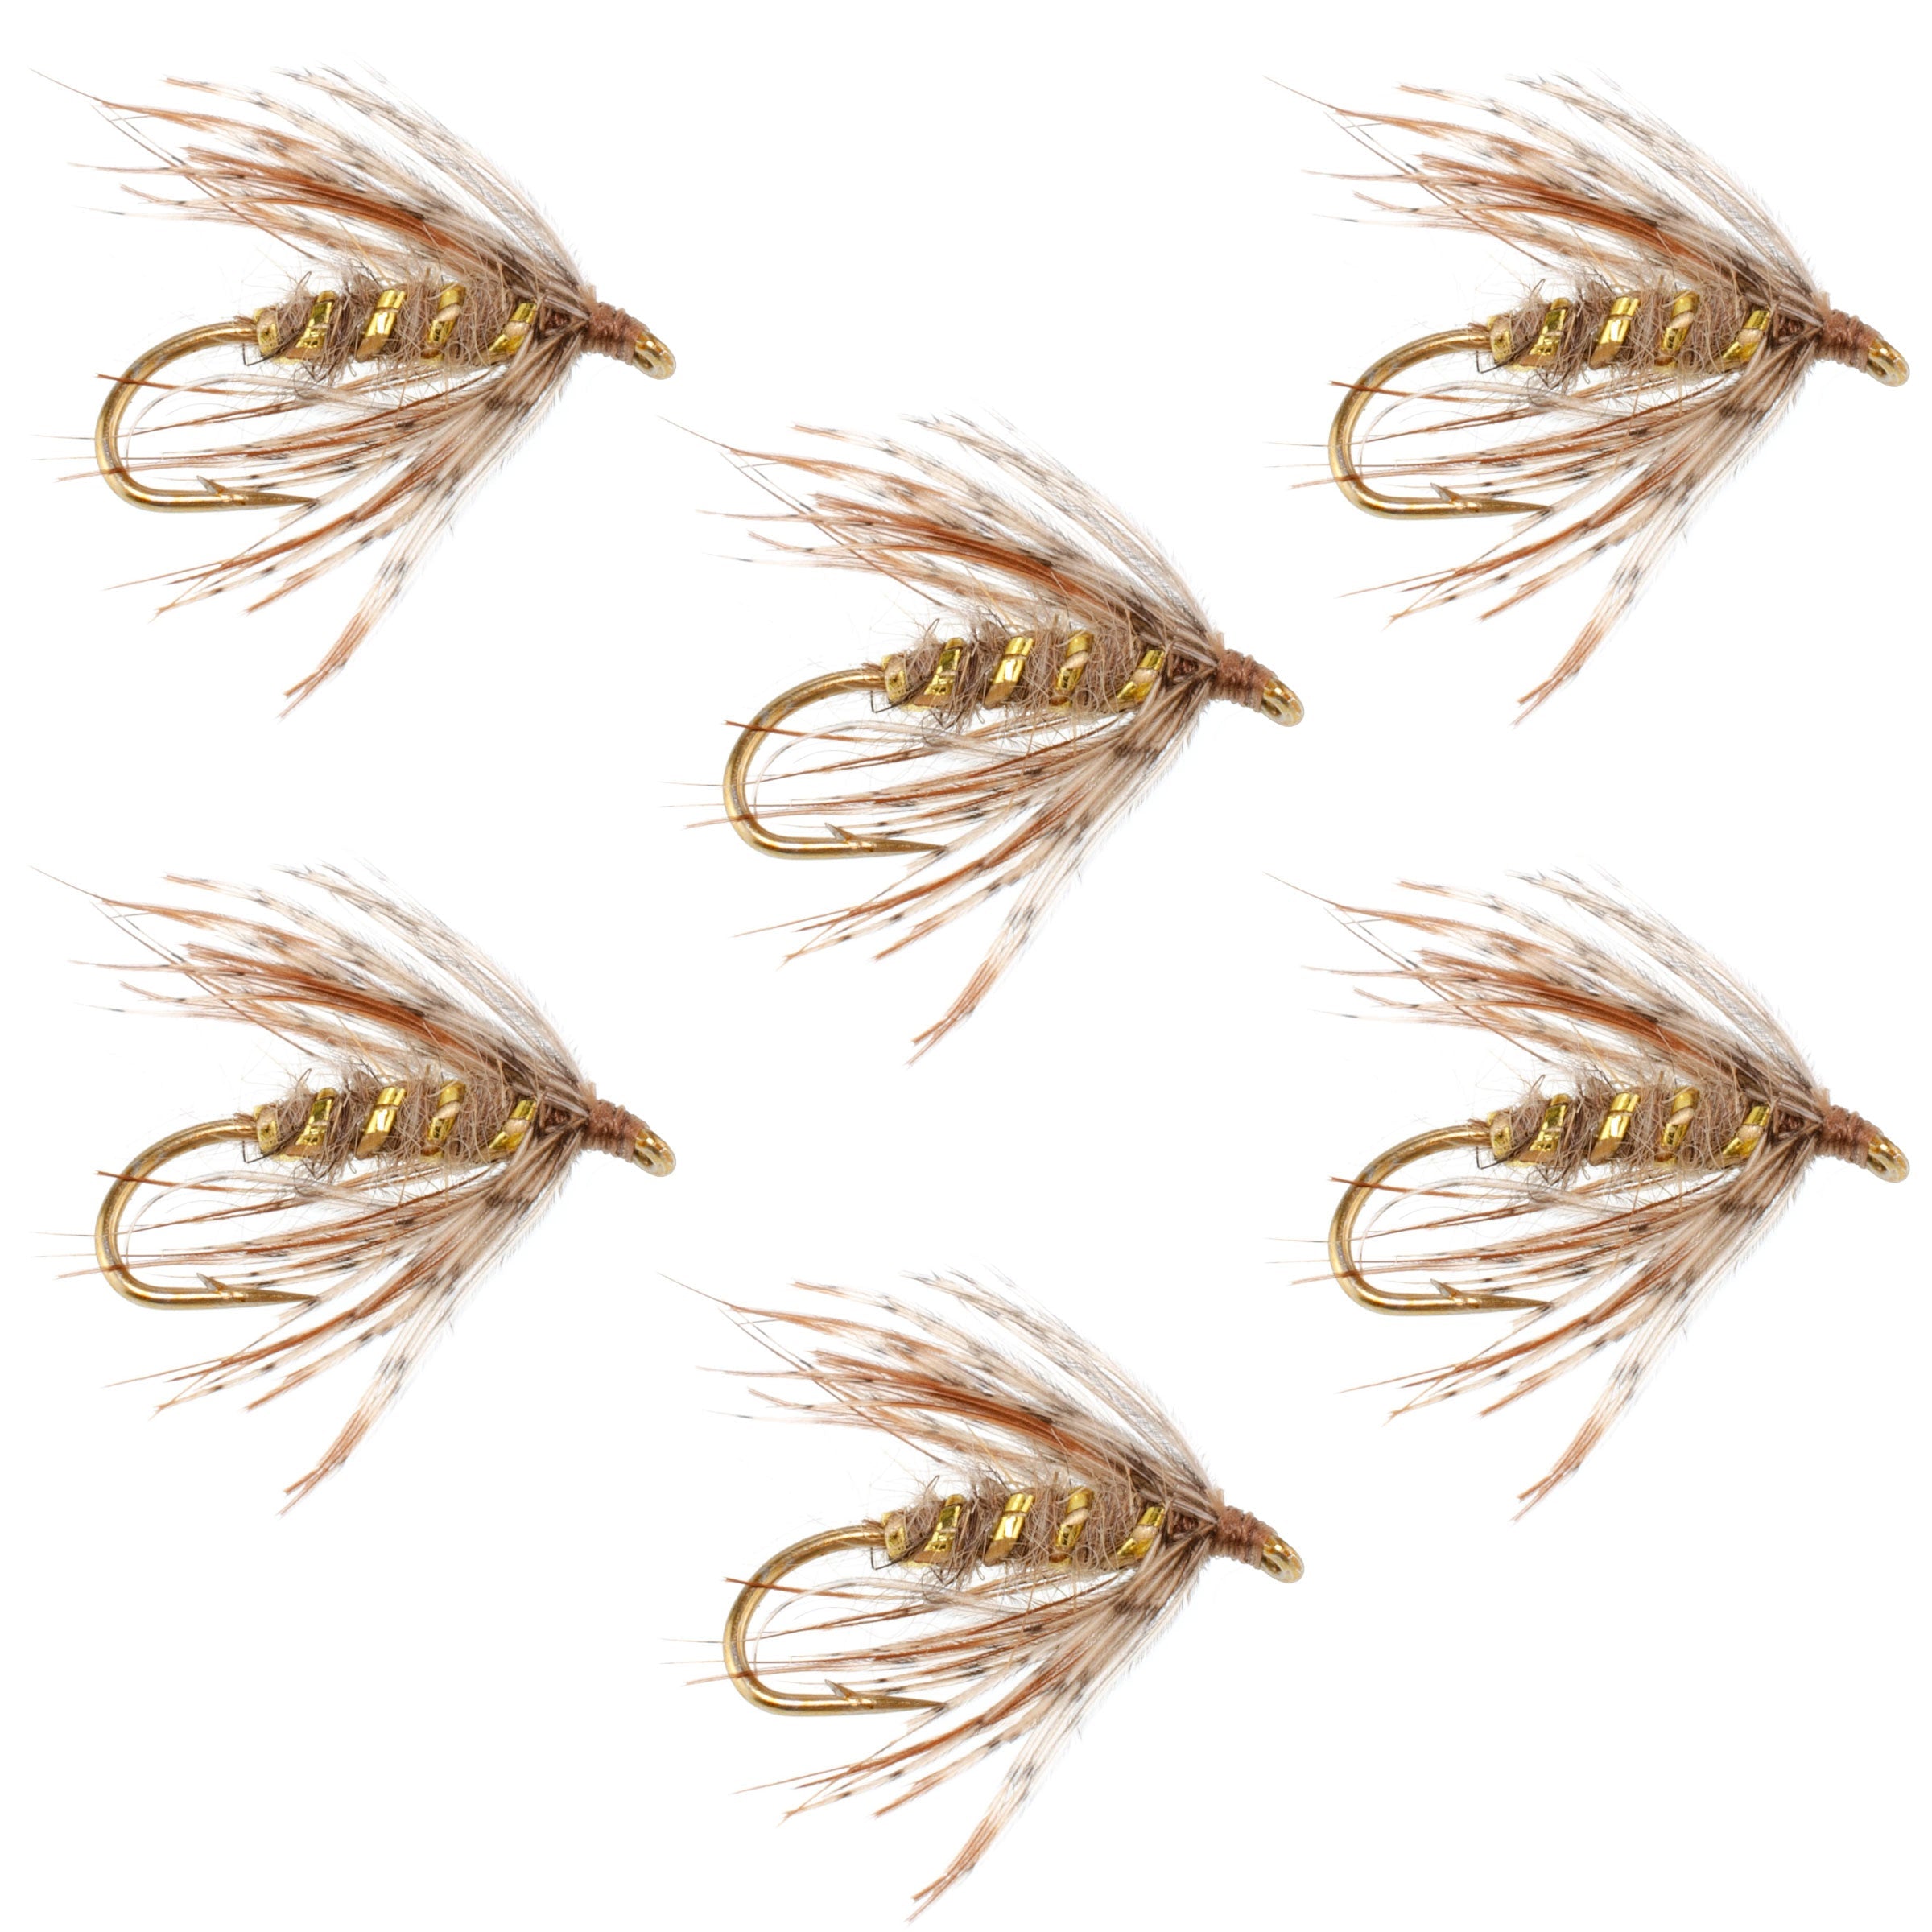 Soft Hackle March Brown Partridge Fly Fishing Wet Flies - 6 Flies Hook Size 14